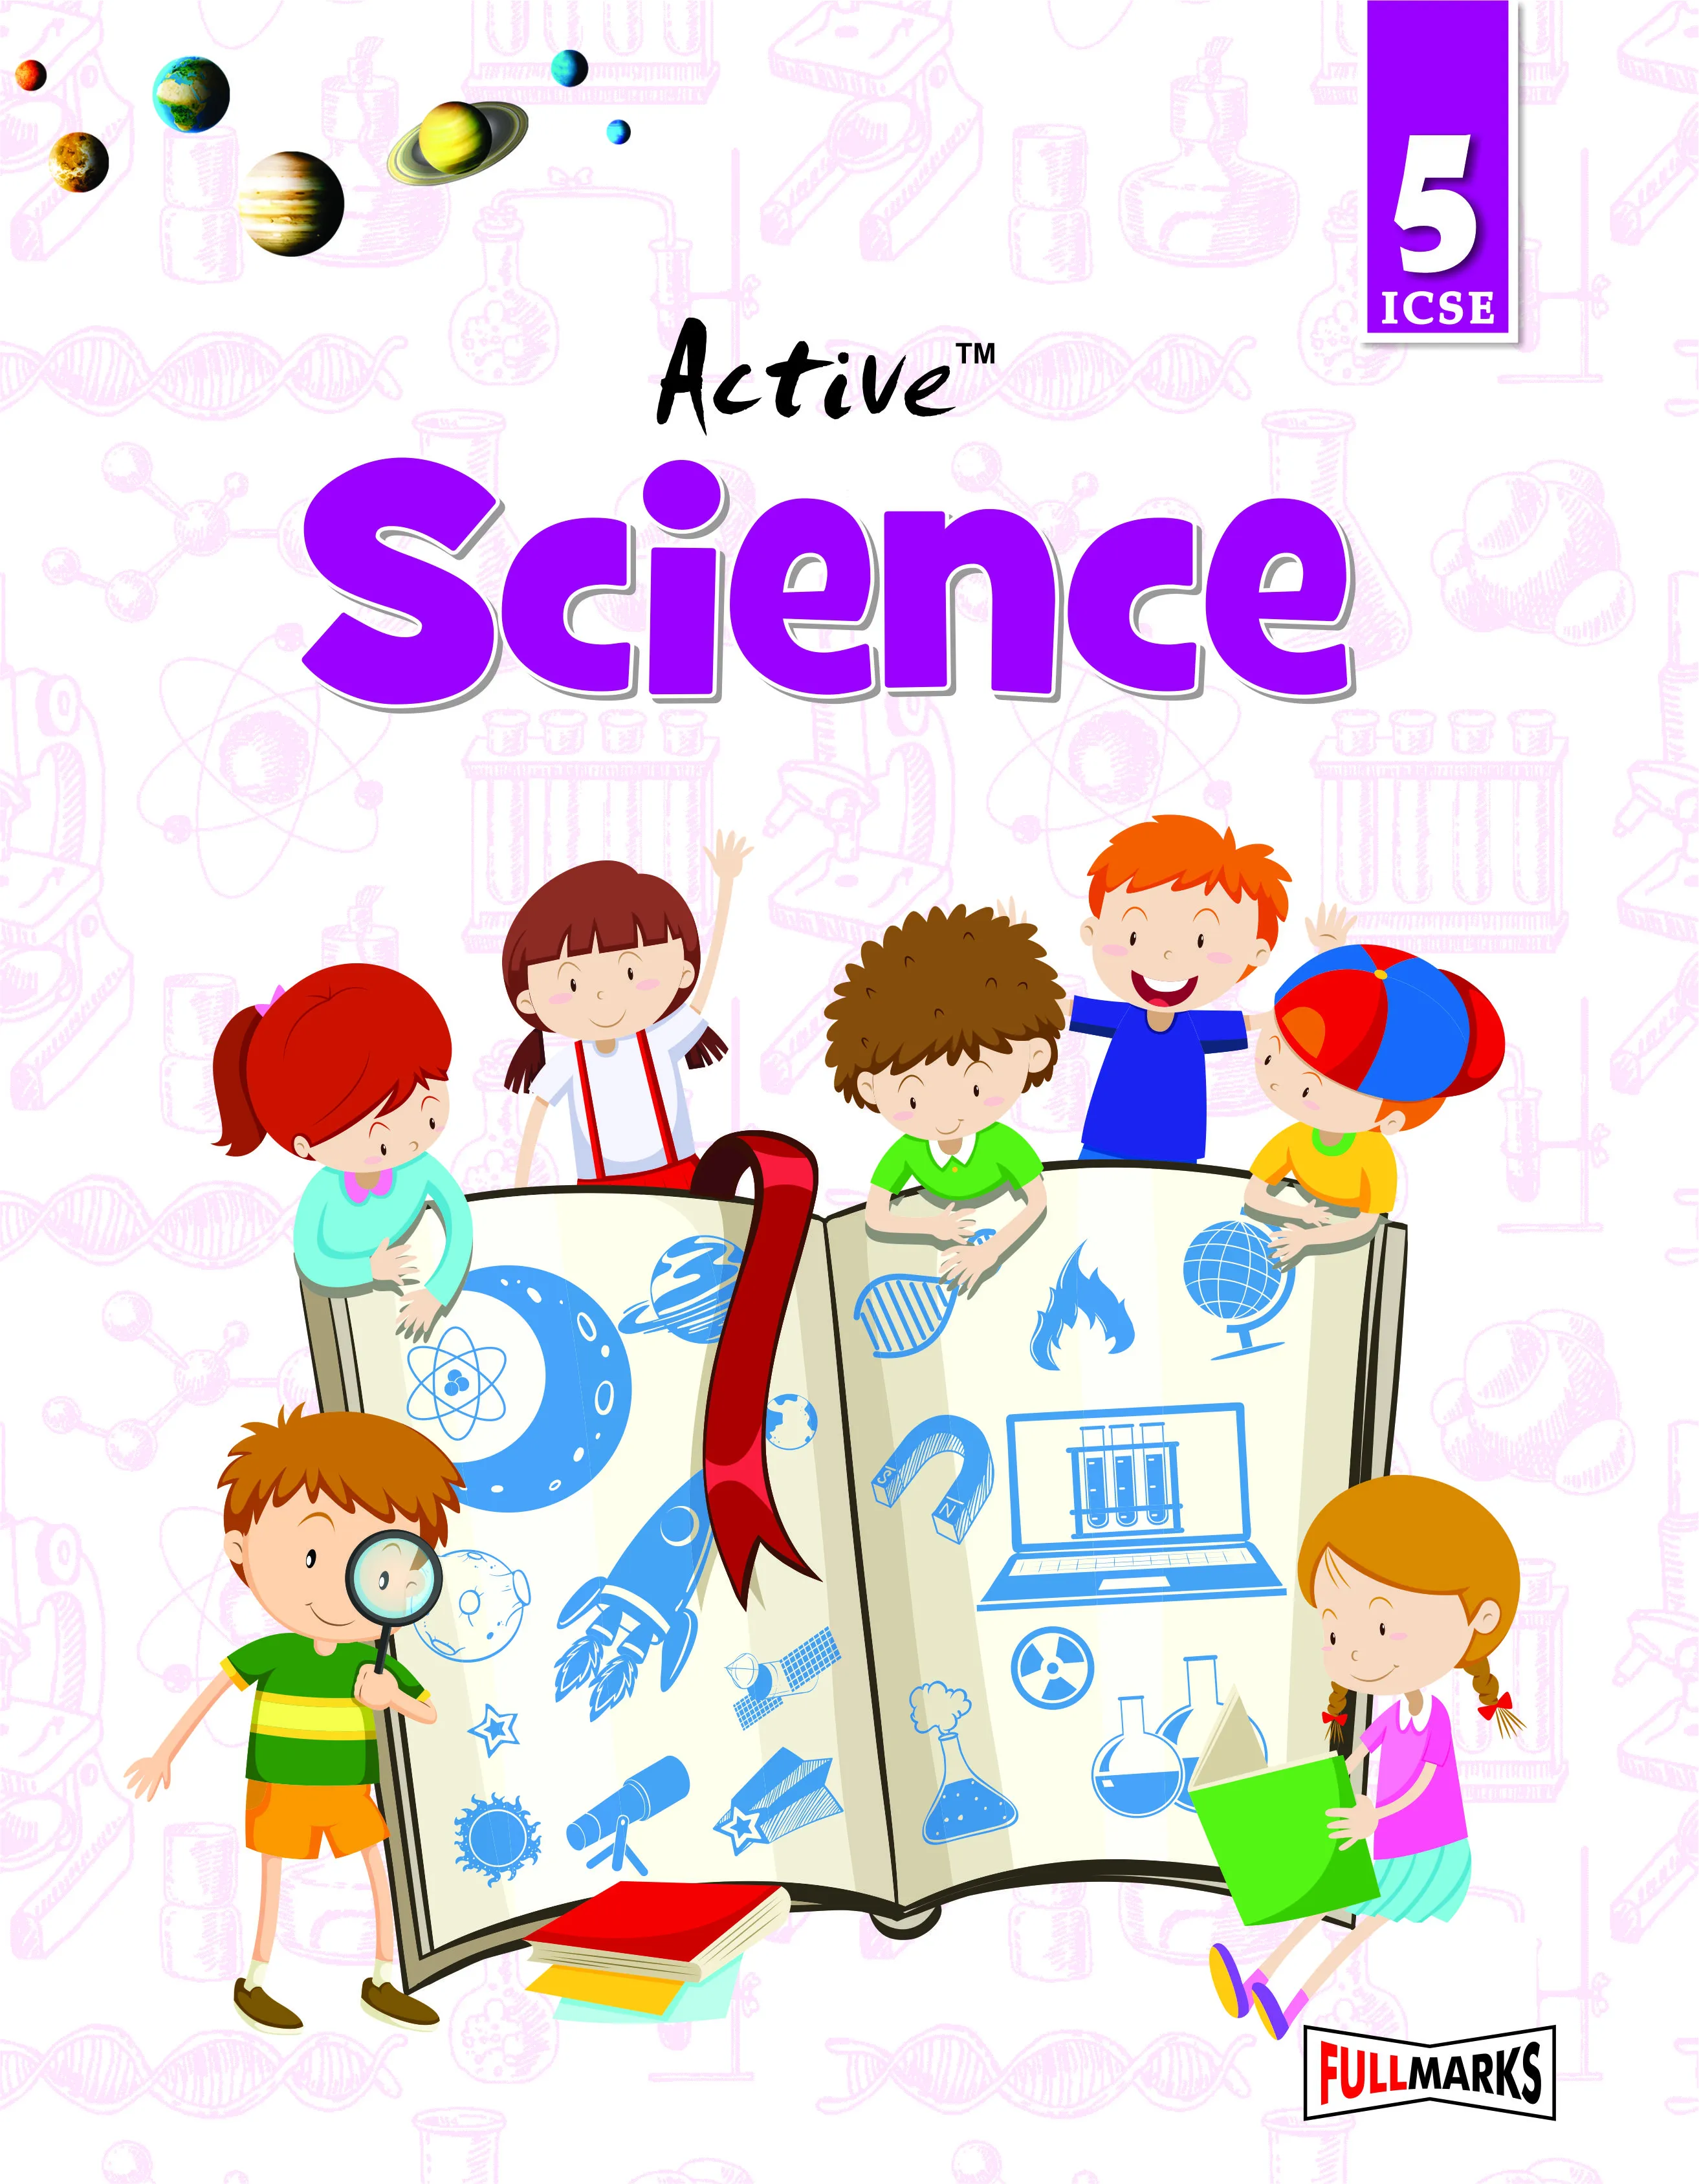 Active Science-5